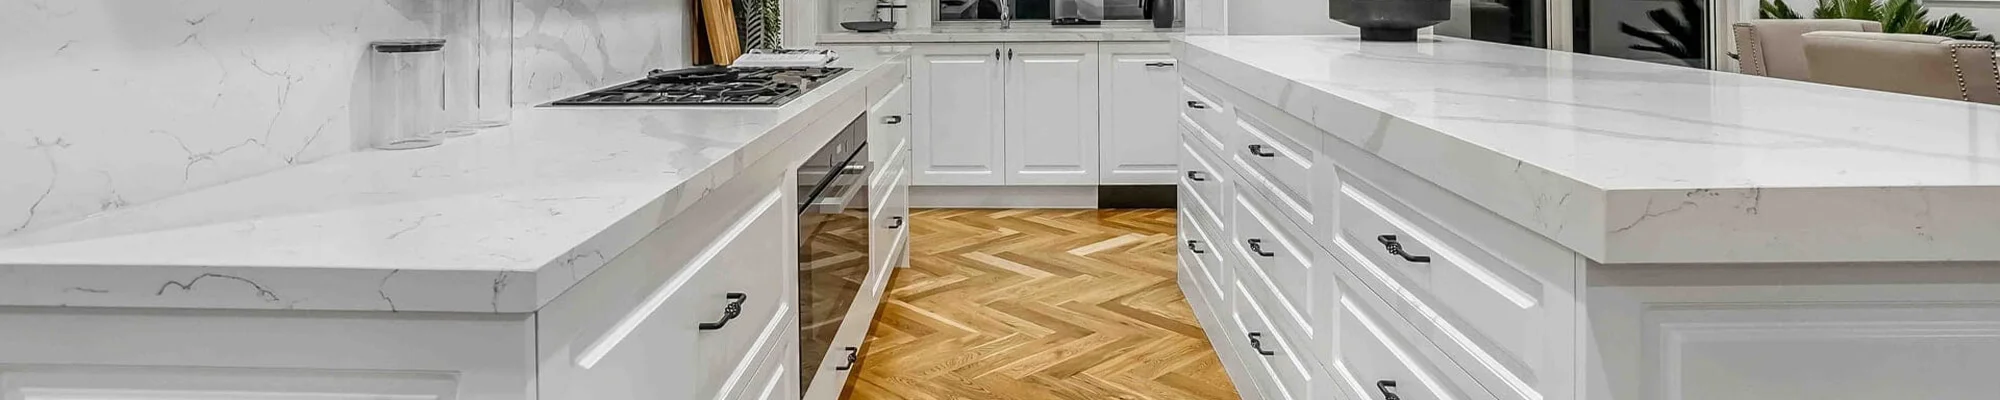 hardwood flooring in kitchen | Pioneer Floor Coverings & Design in Cedar City or Washington UT